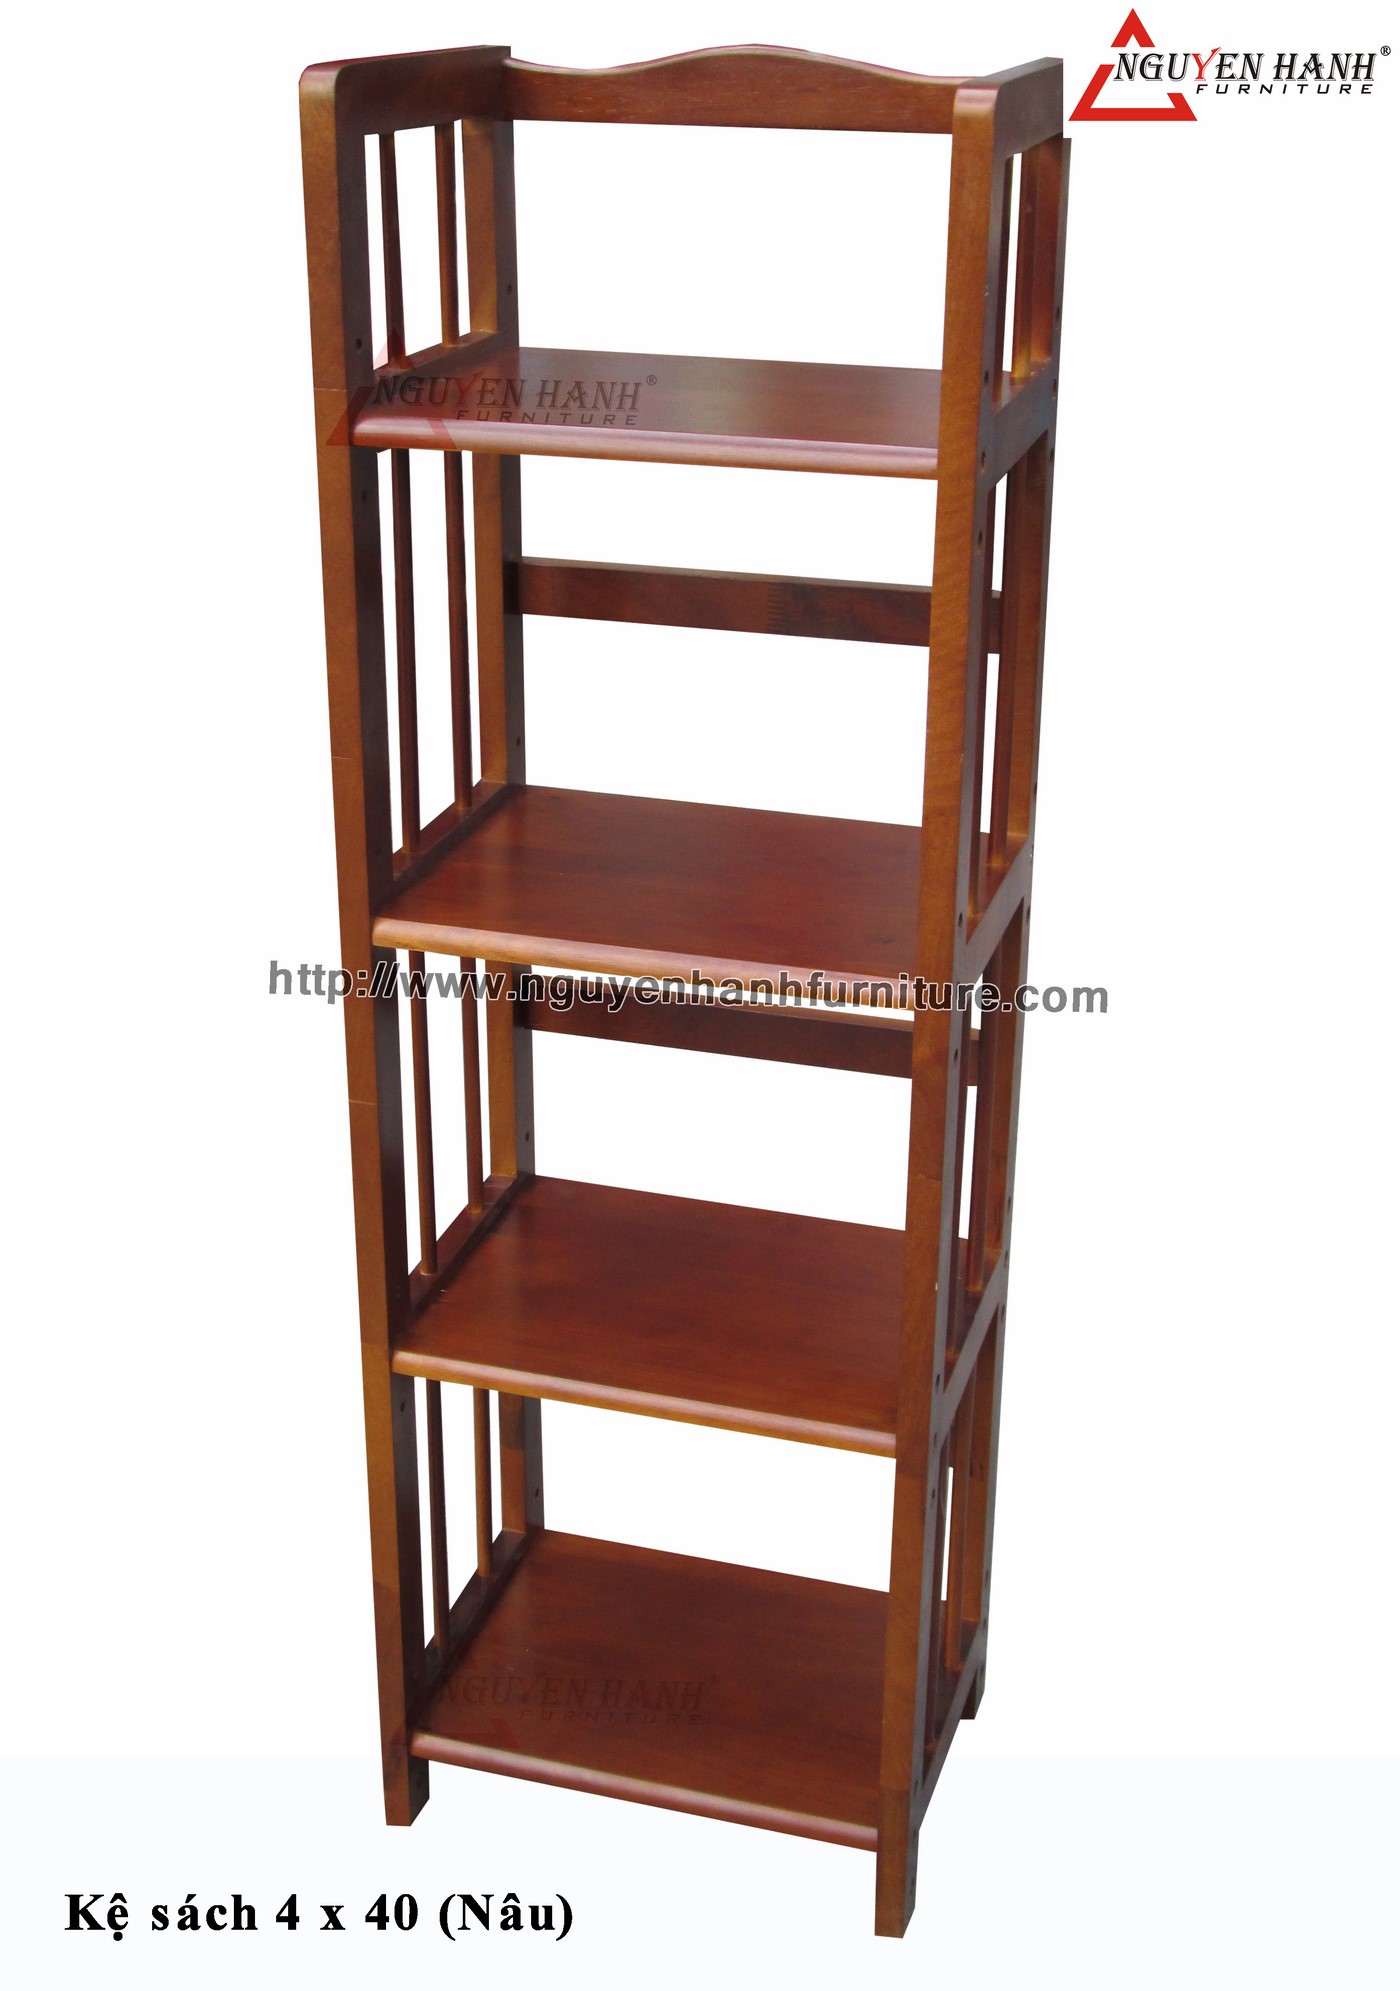 Name product: 4 storey Adjustable Bookshelf 40 (Brown) -  Dimensions: 40 x 28 x 120 (H) - Description: Wood natural rubber